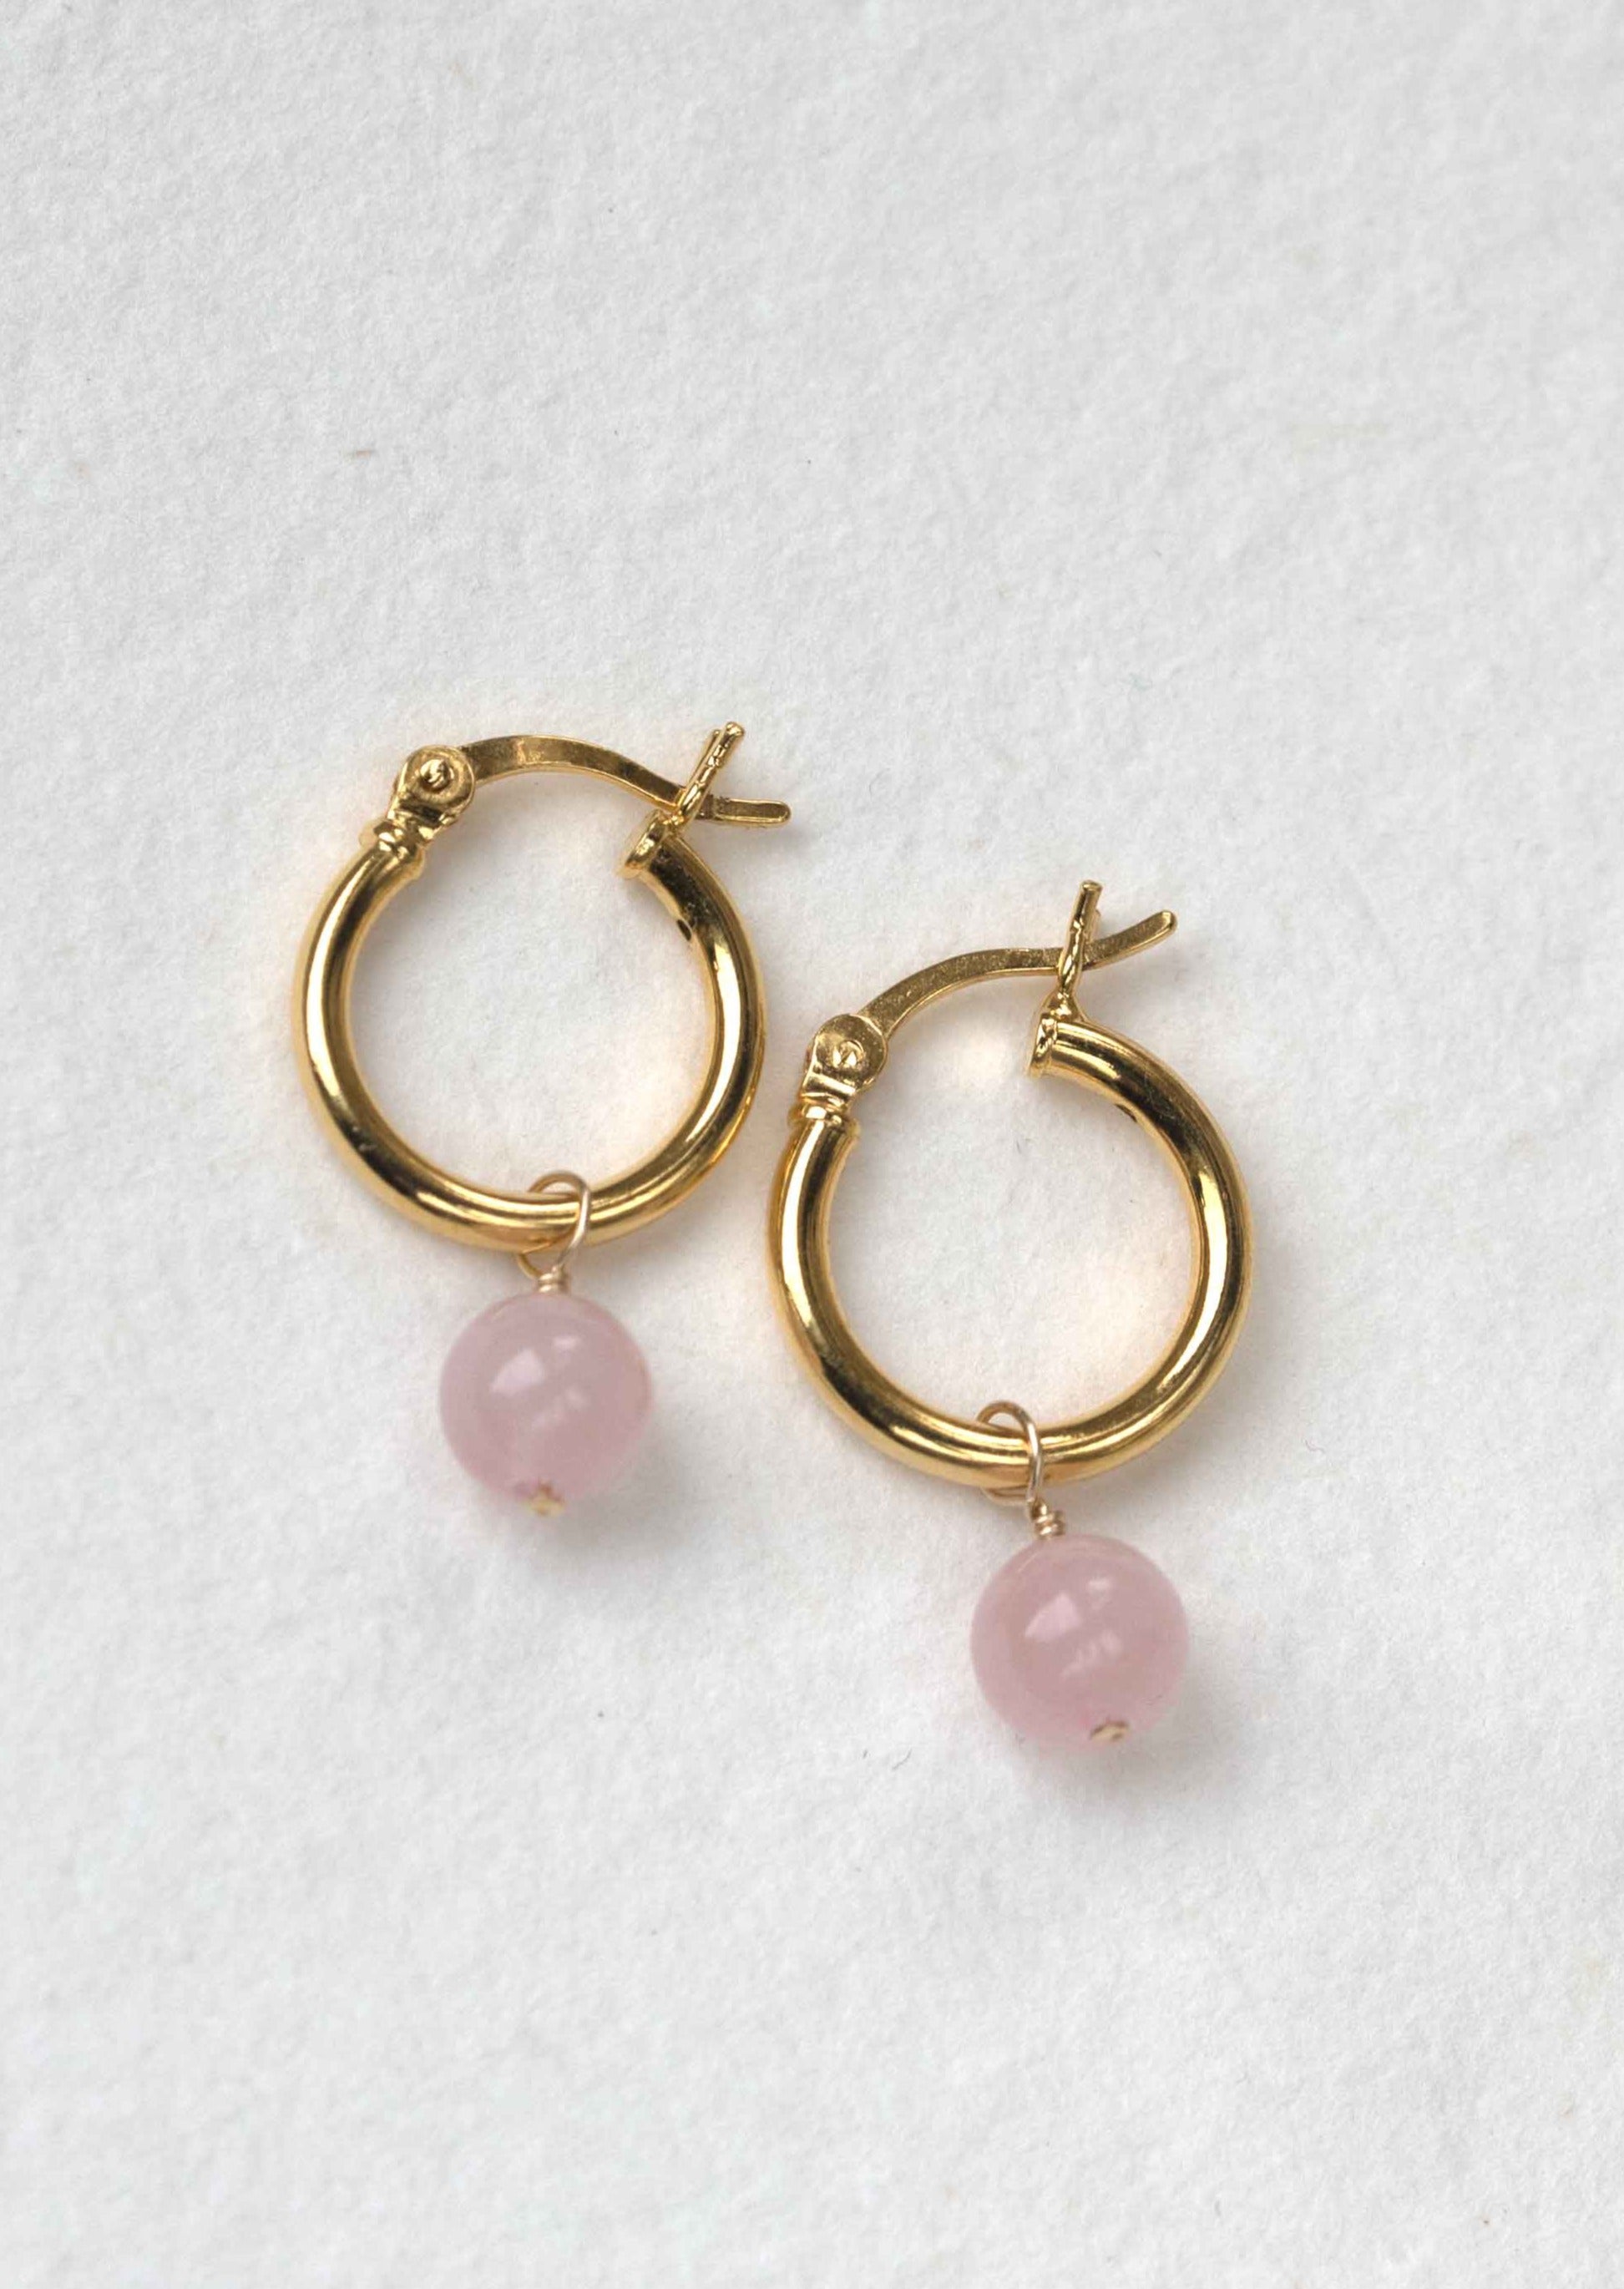 rose quartz earrings in gold hoops